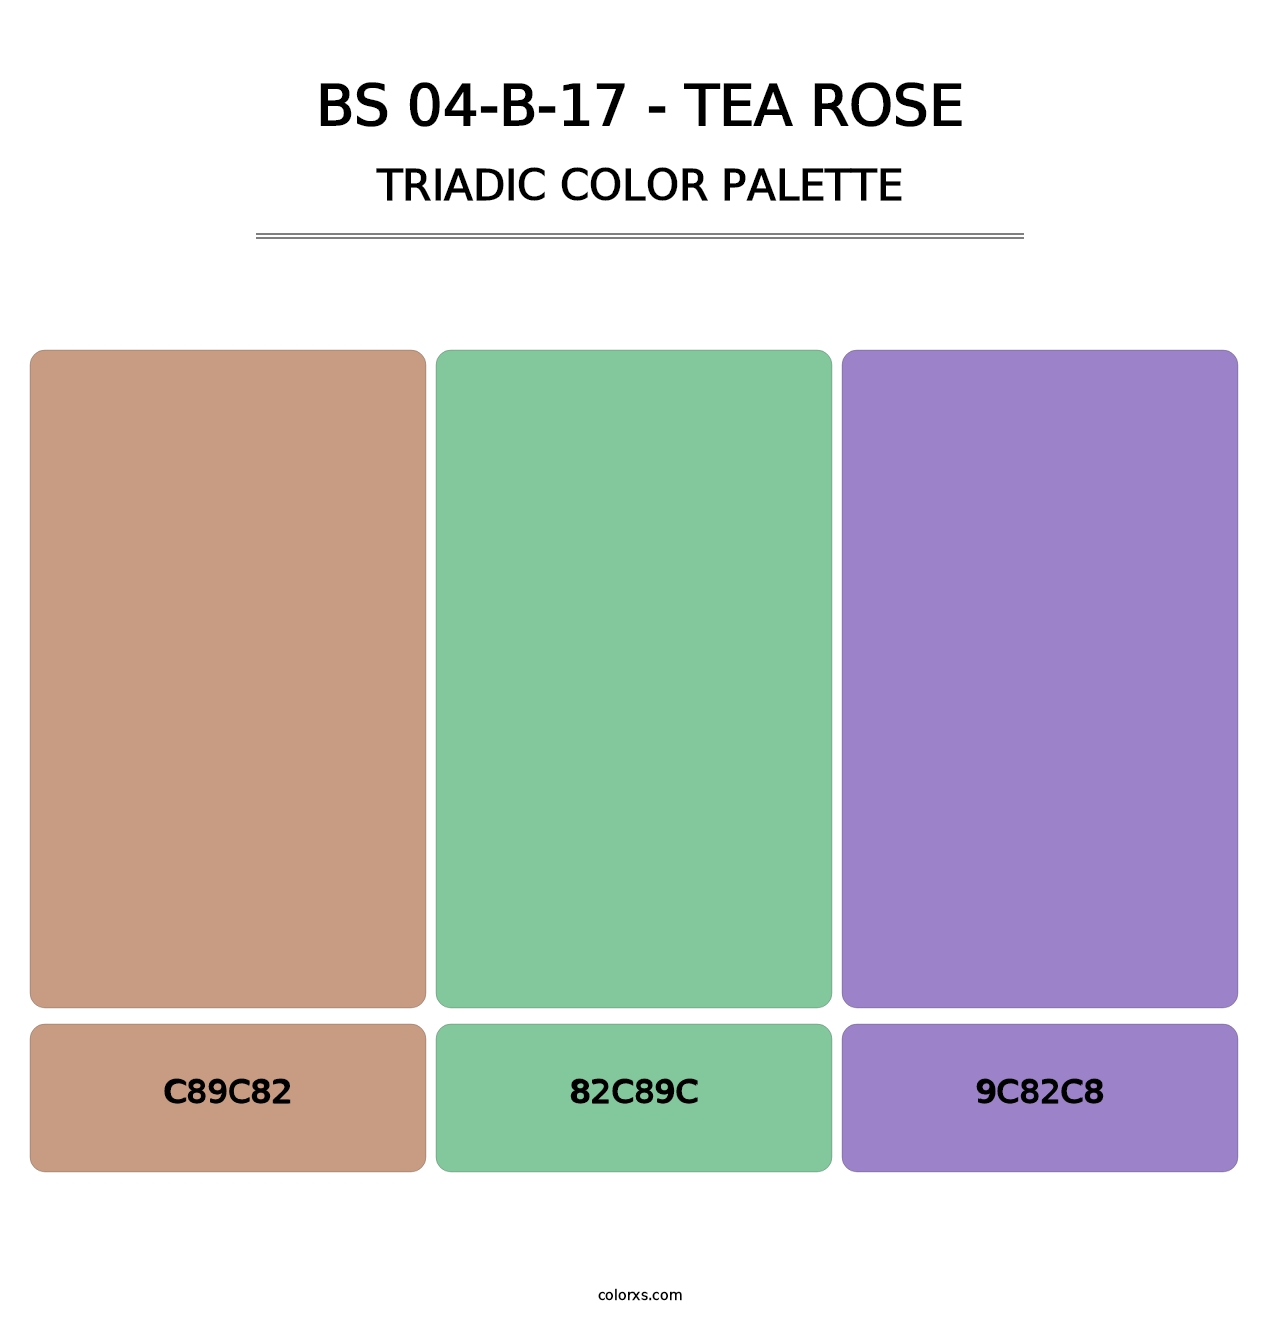 BS 04-B-17 - Tea Rose - Triadic Color Palette